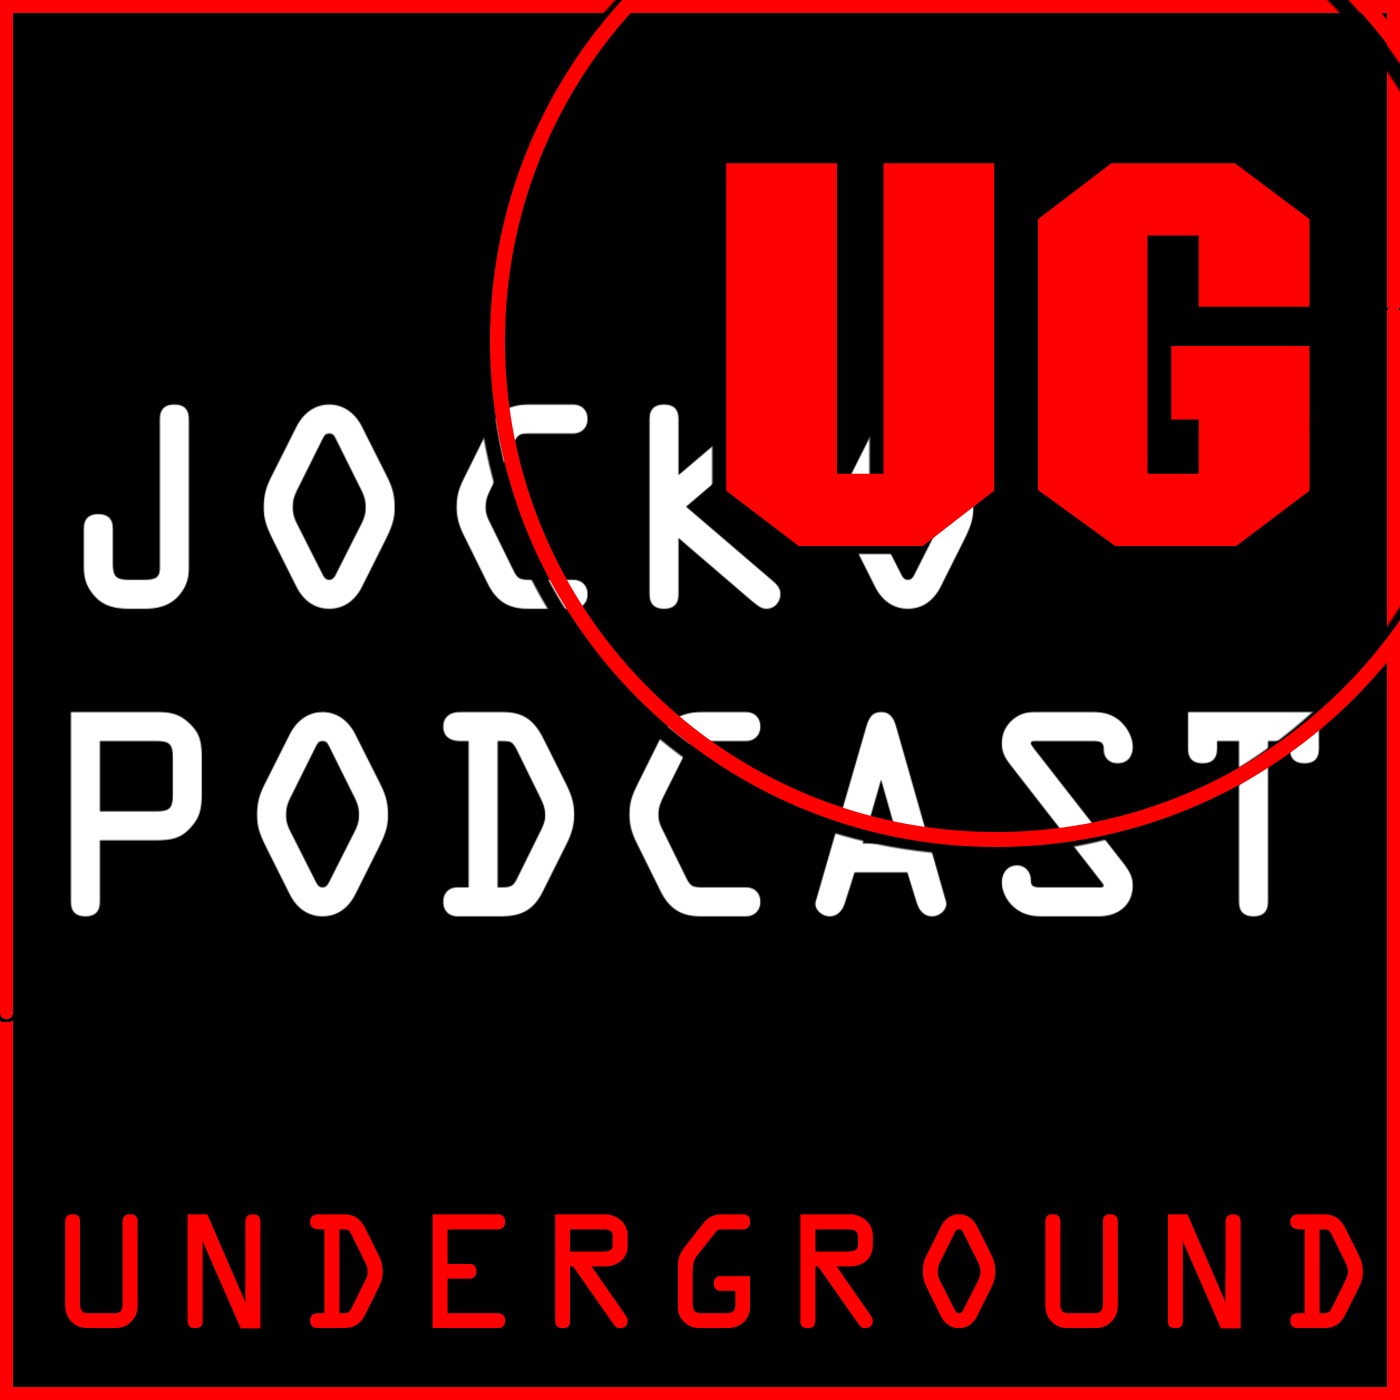 Jocko Underground: These Are Your Defense Mechanisms